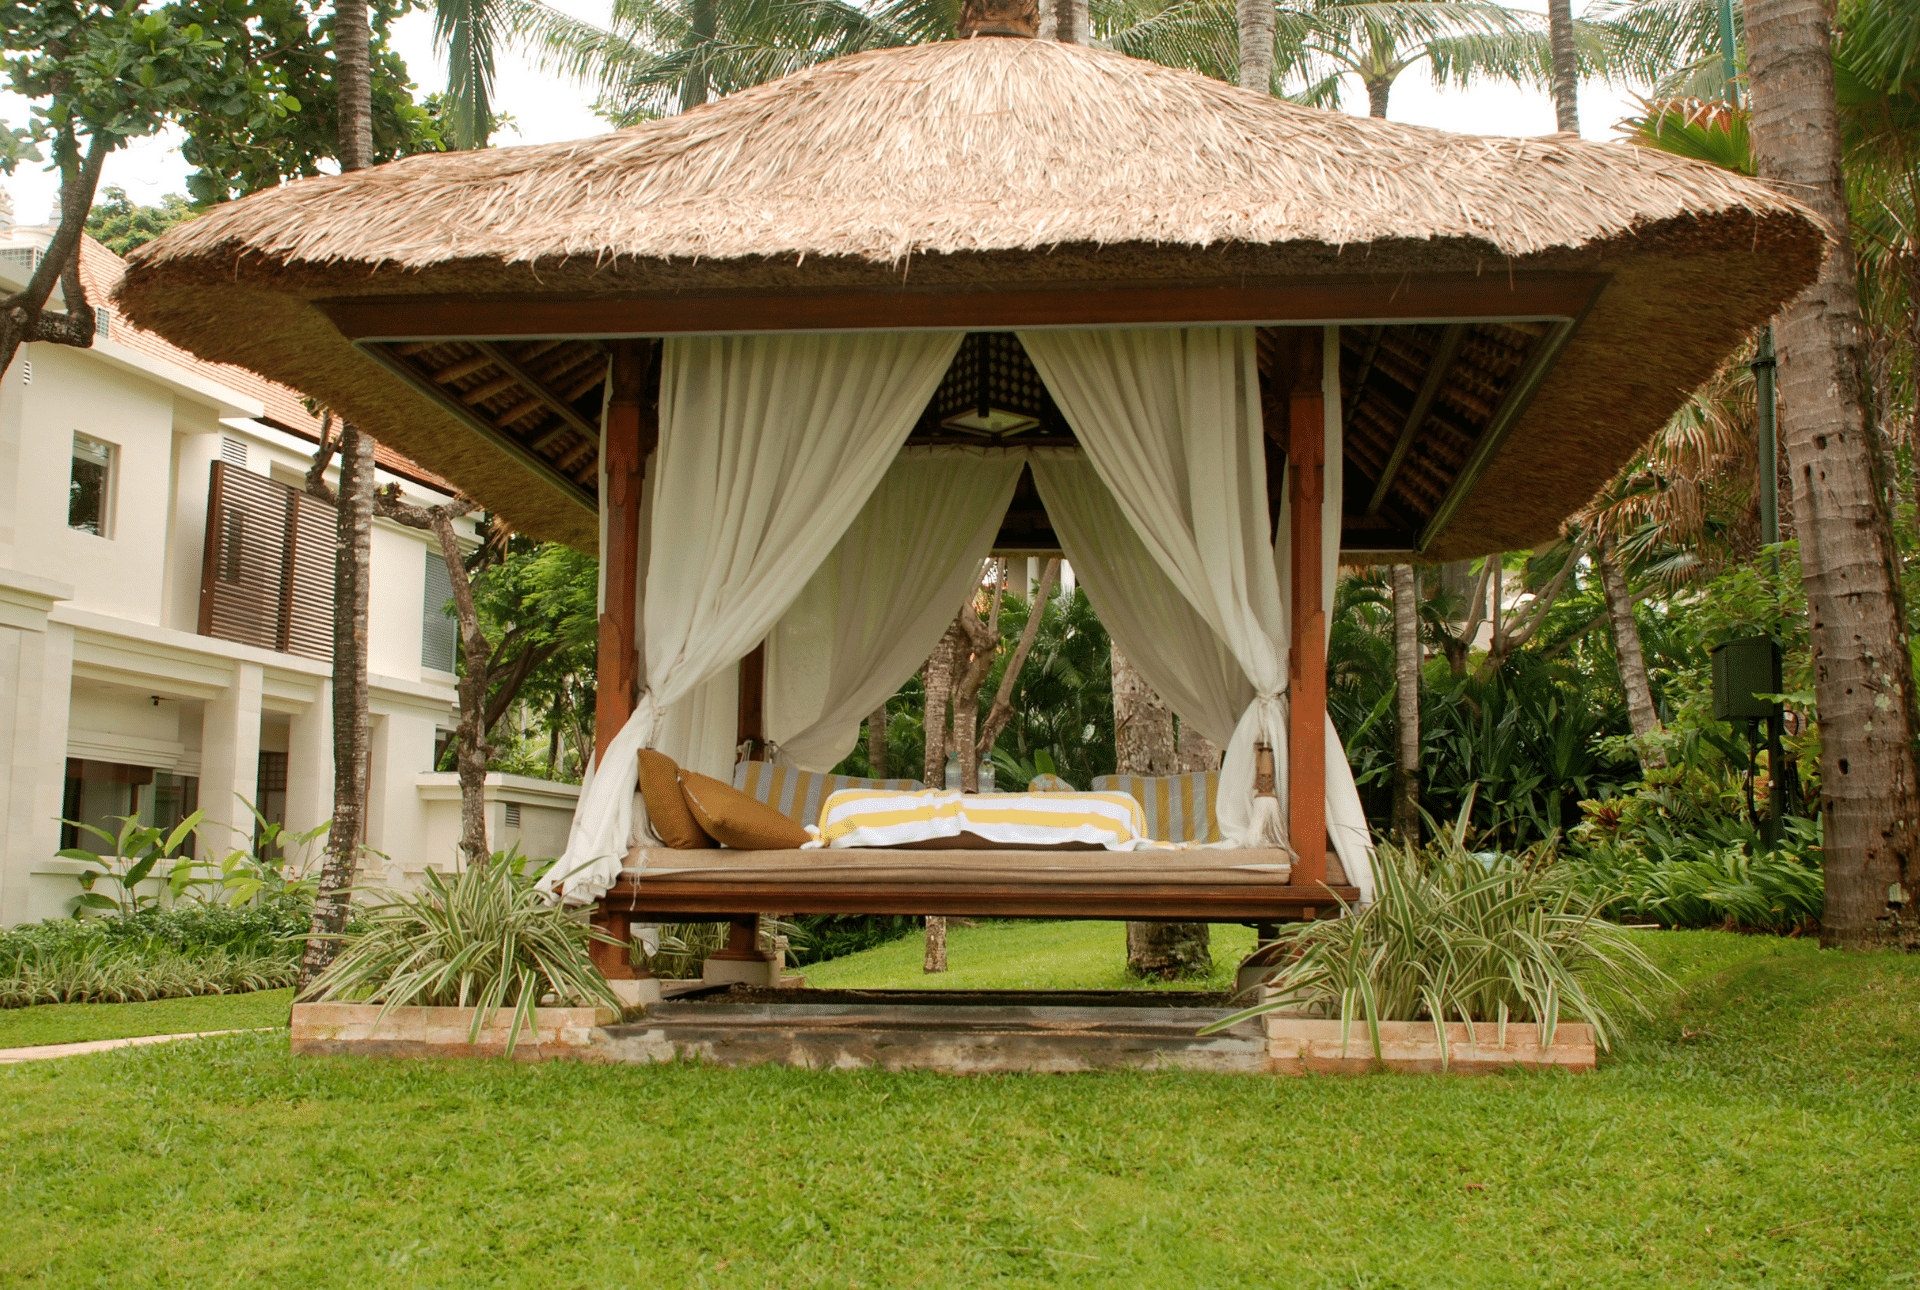 Resort-Inspired Retreat in Your Backyard